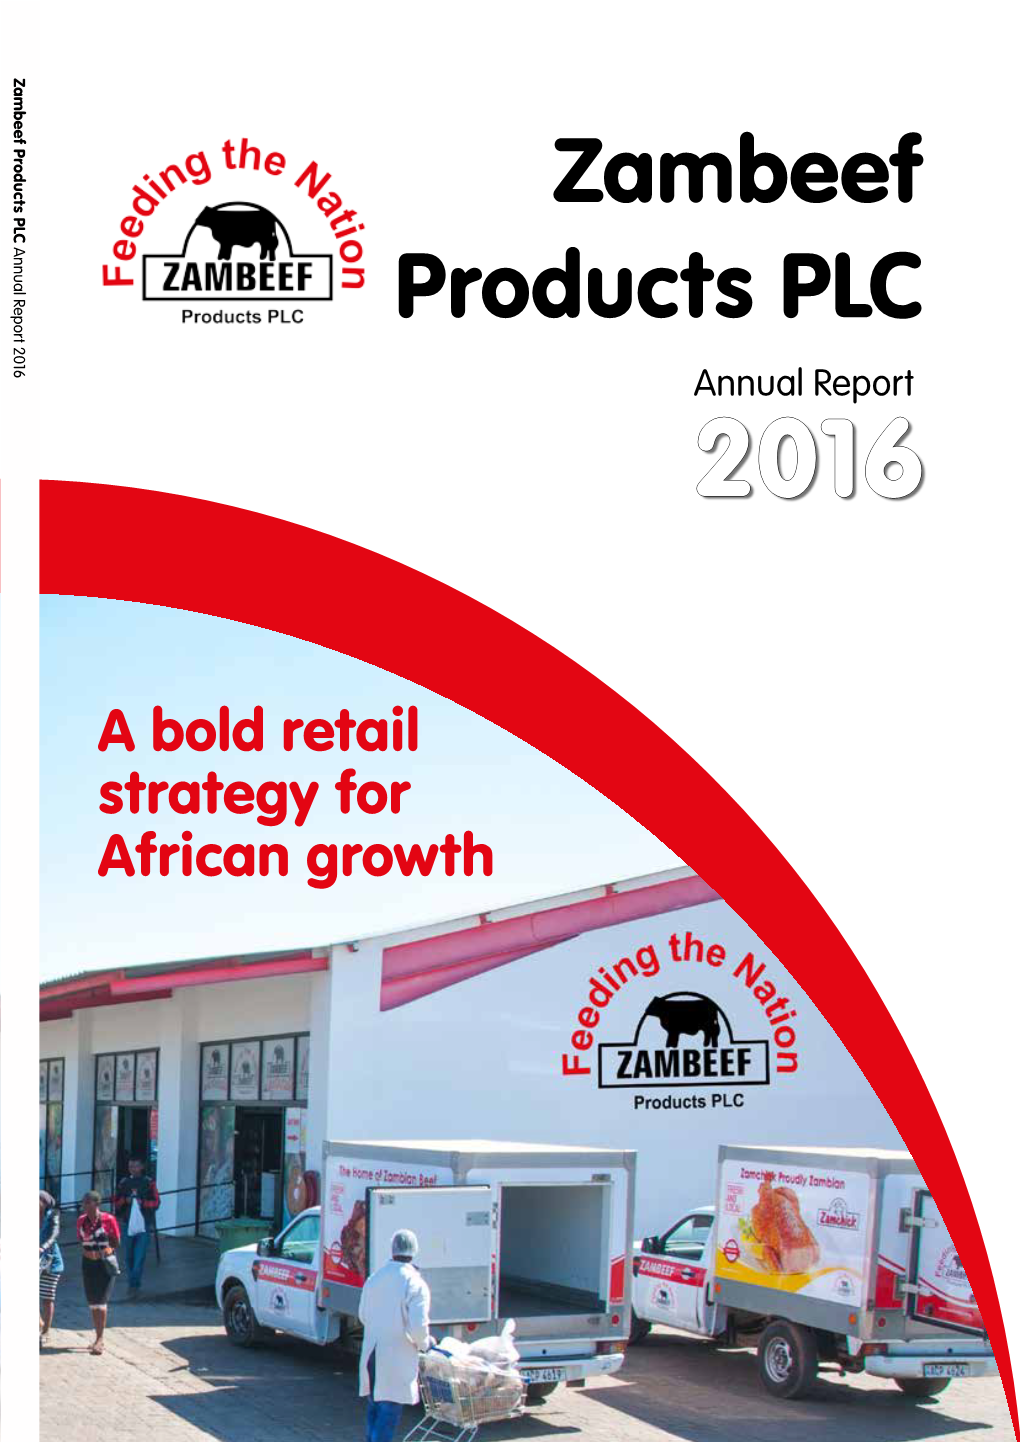 Zambeef Products PLC 2016 Annual Report Zambeef Products PLC Annual Report 2016